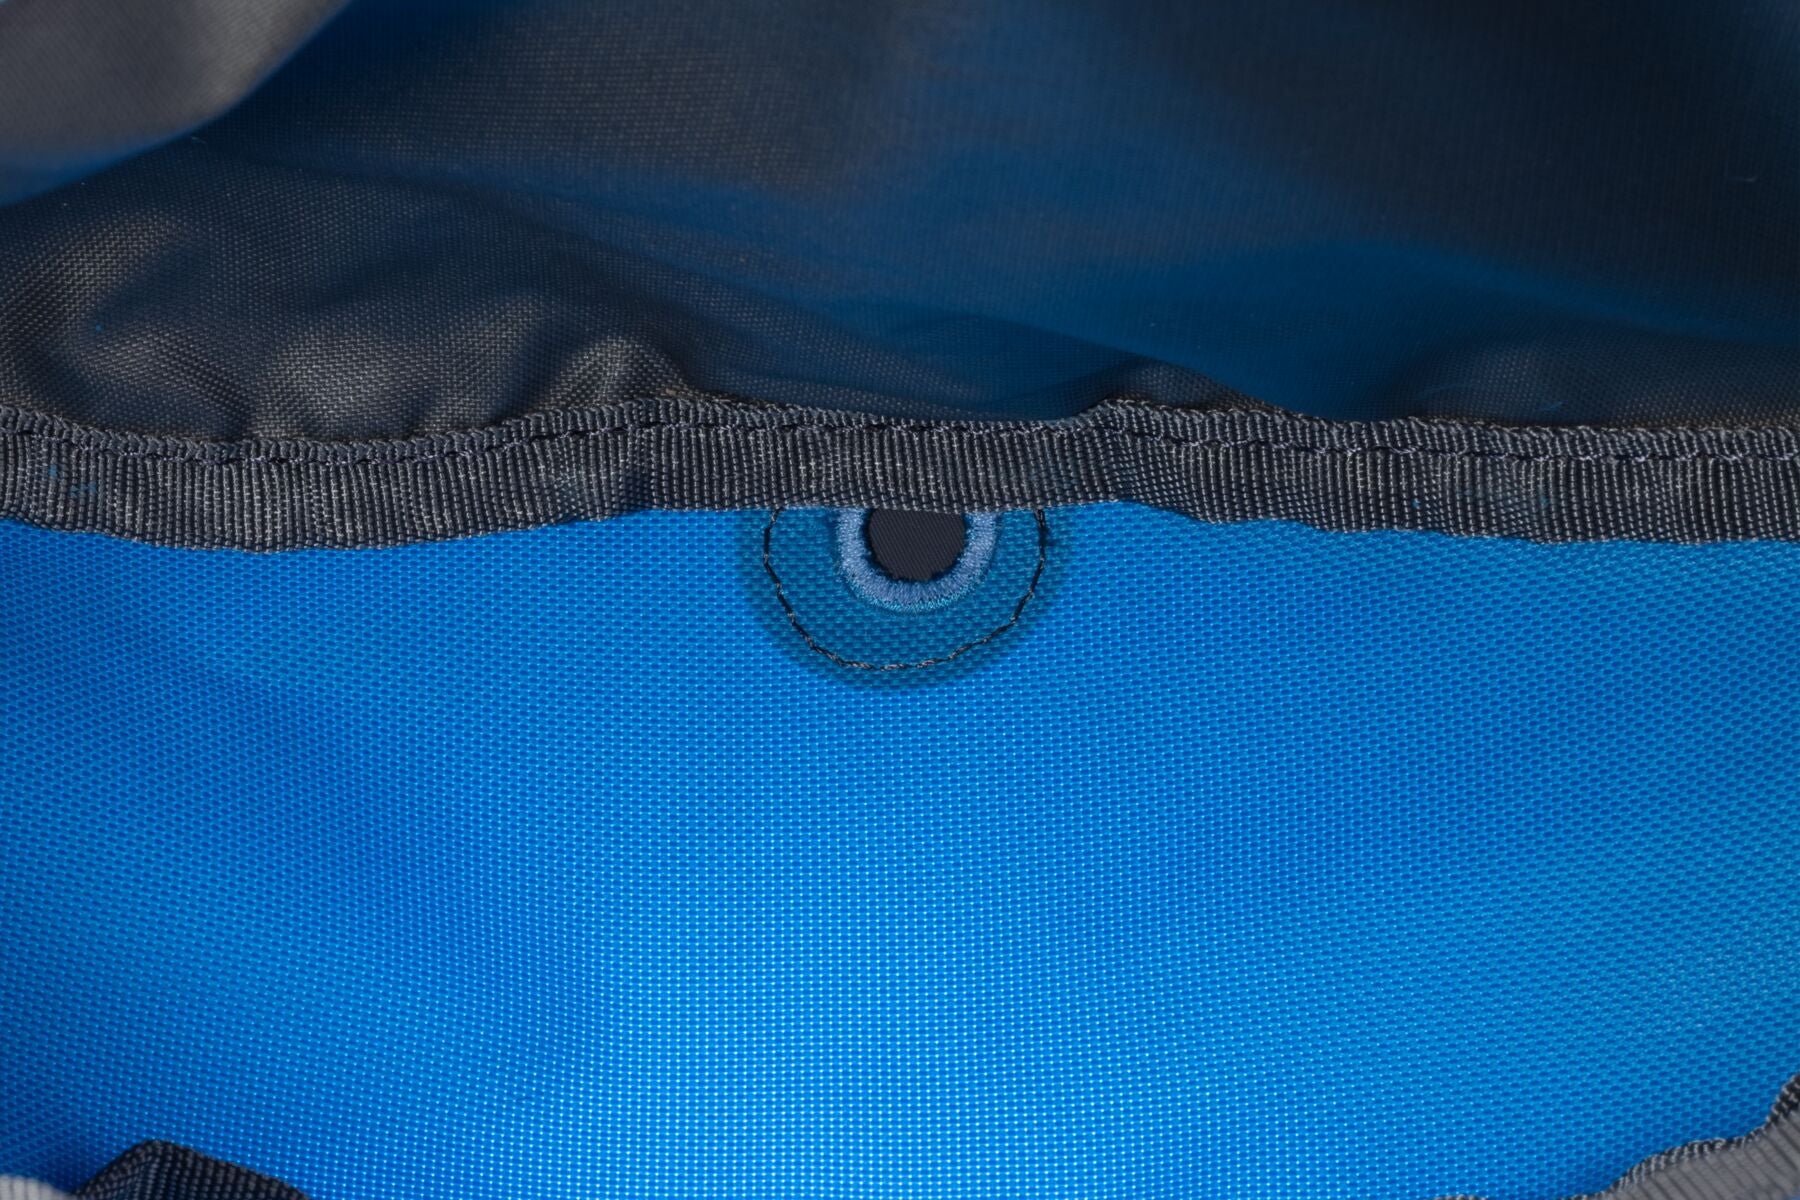 Alforja para Perros Approach Pack en Azul (Blue Dusk) de Ruffwear